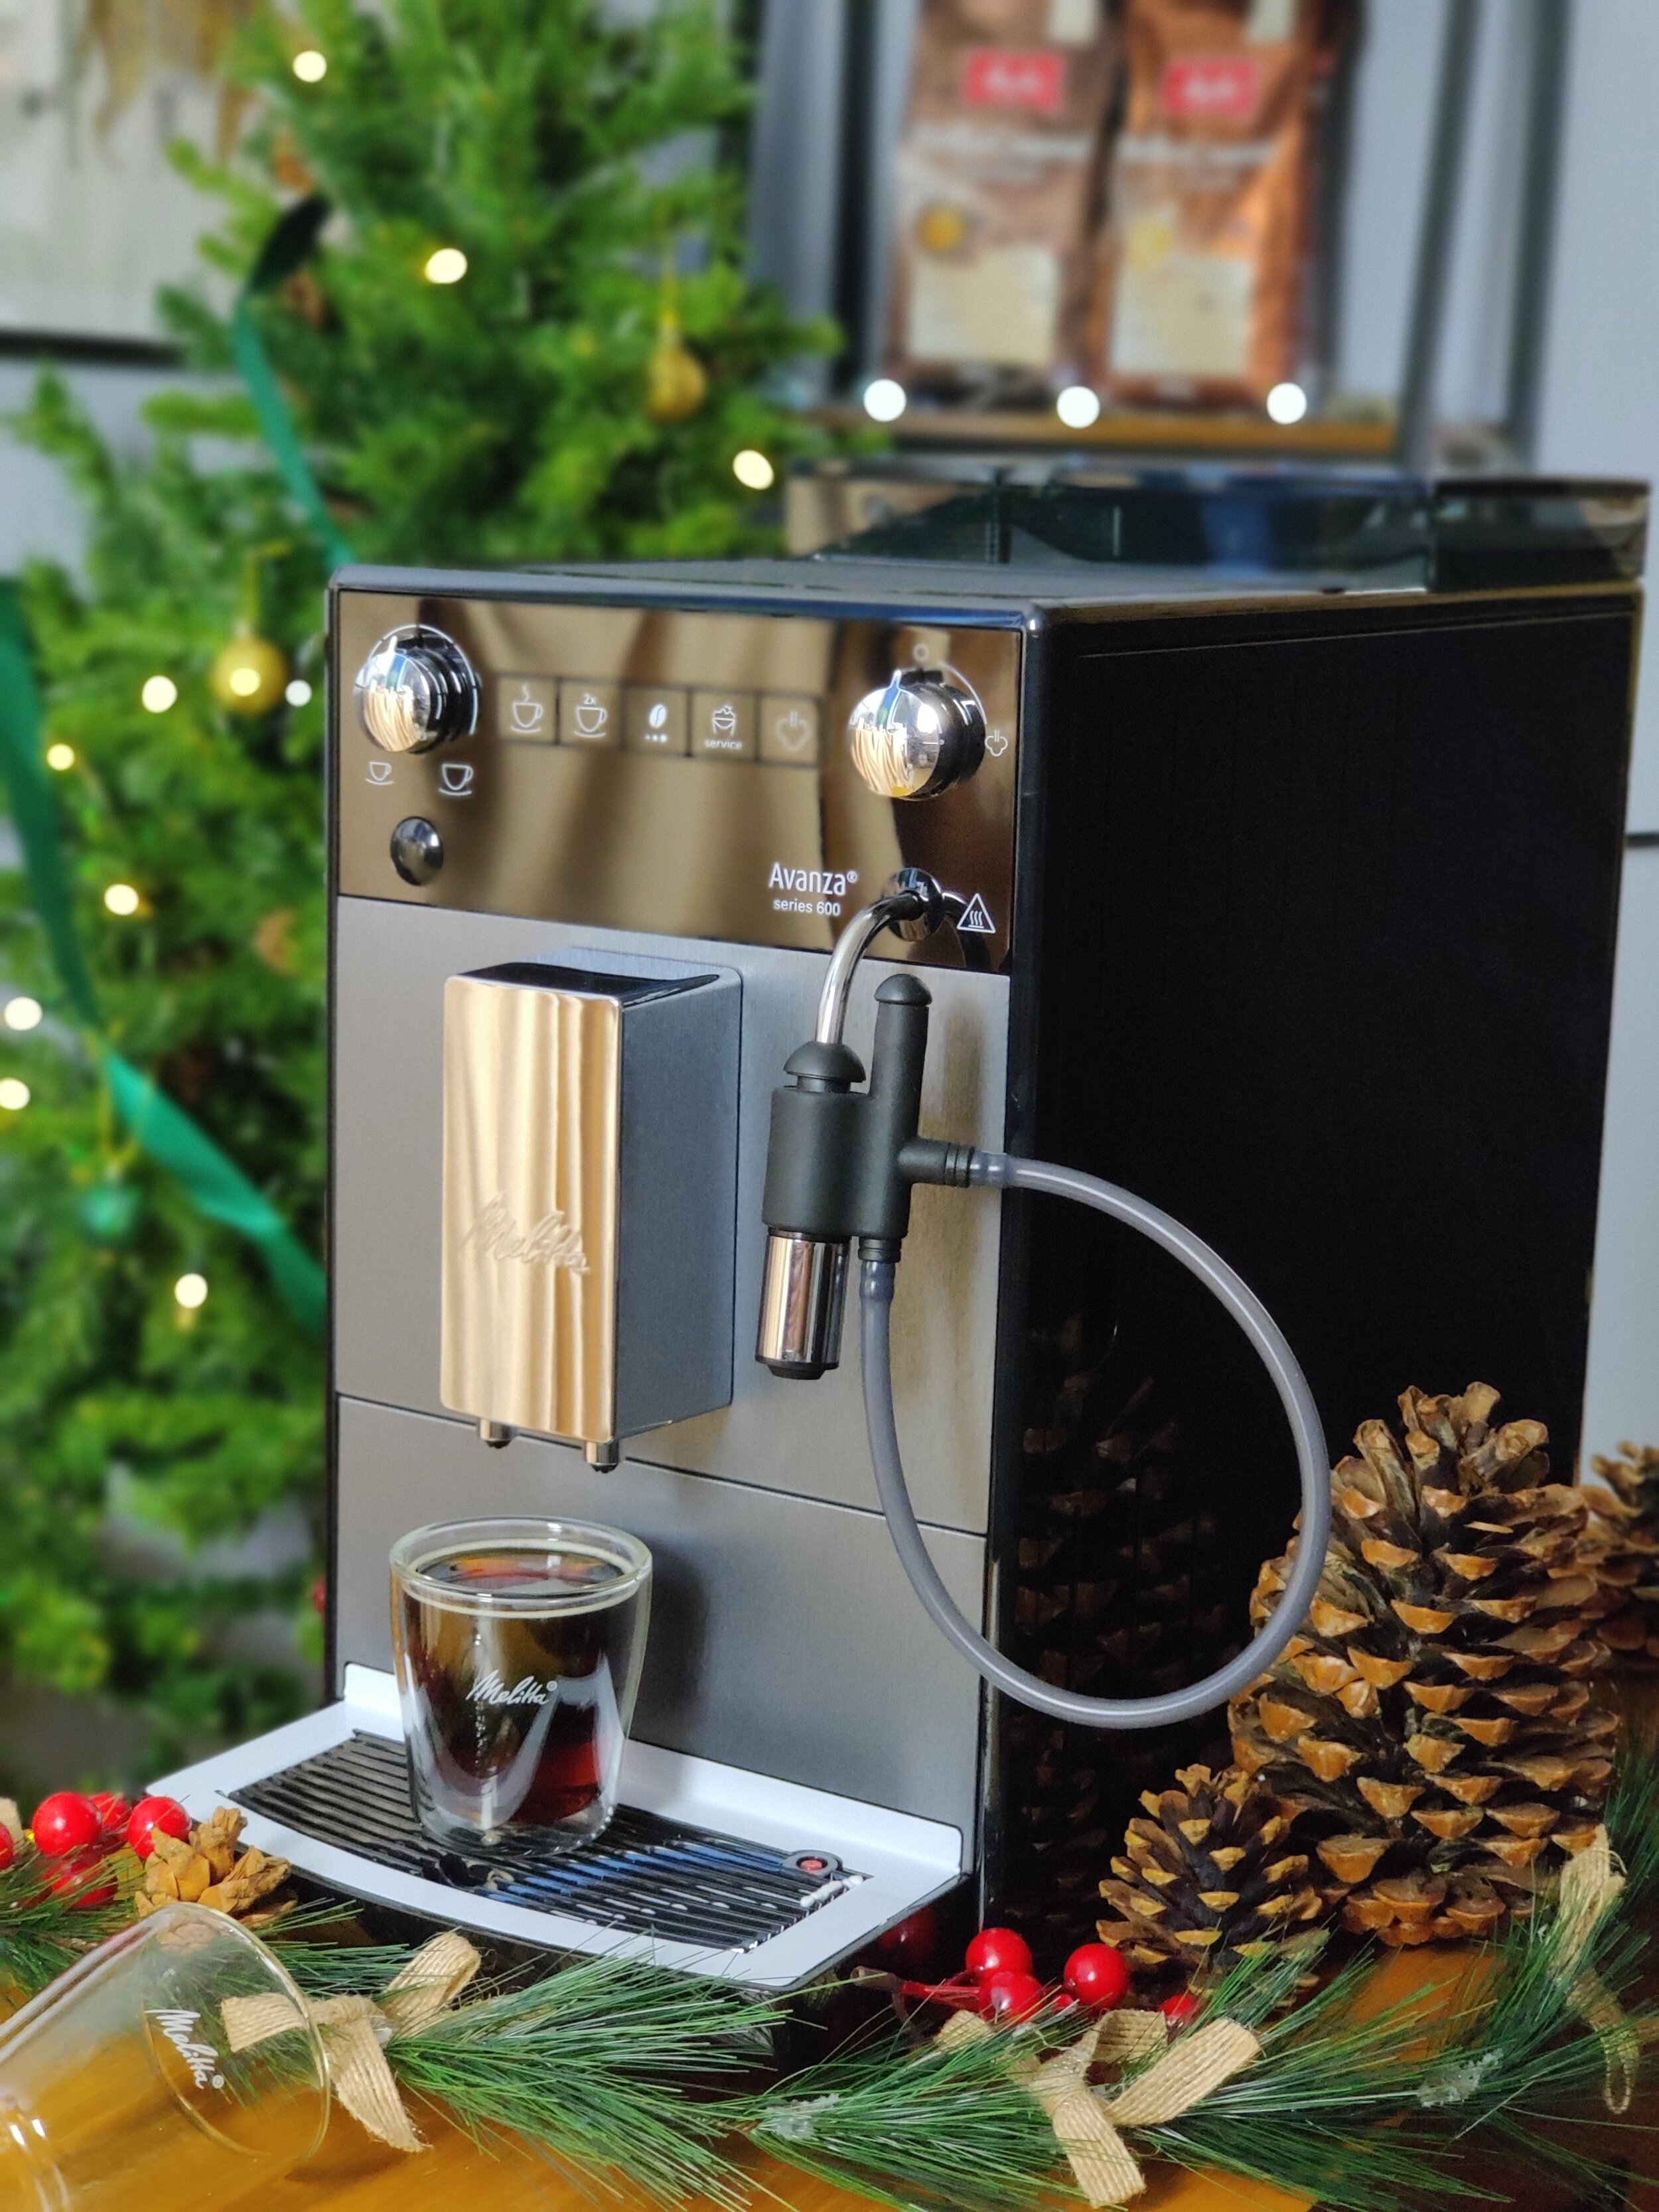 Melitta Avanza Series 600 Coffee Machine